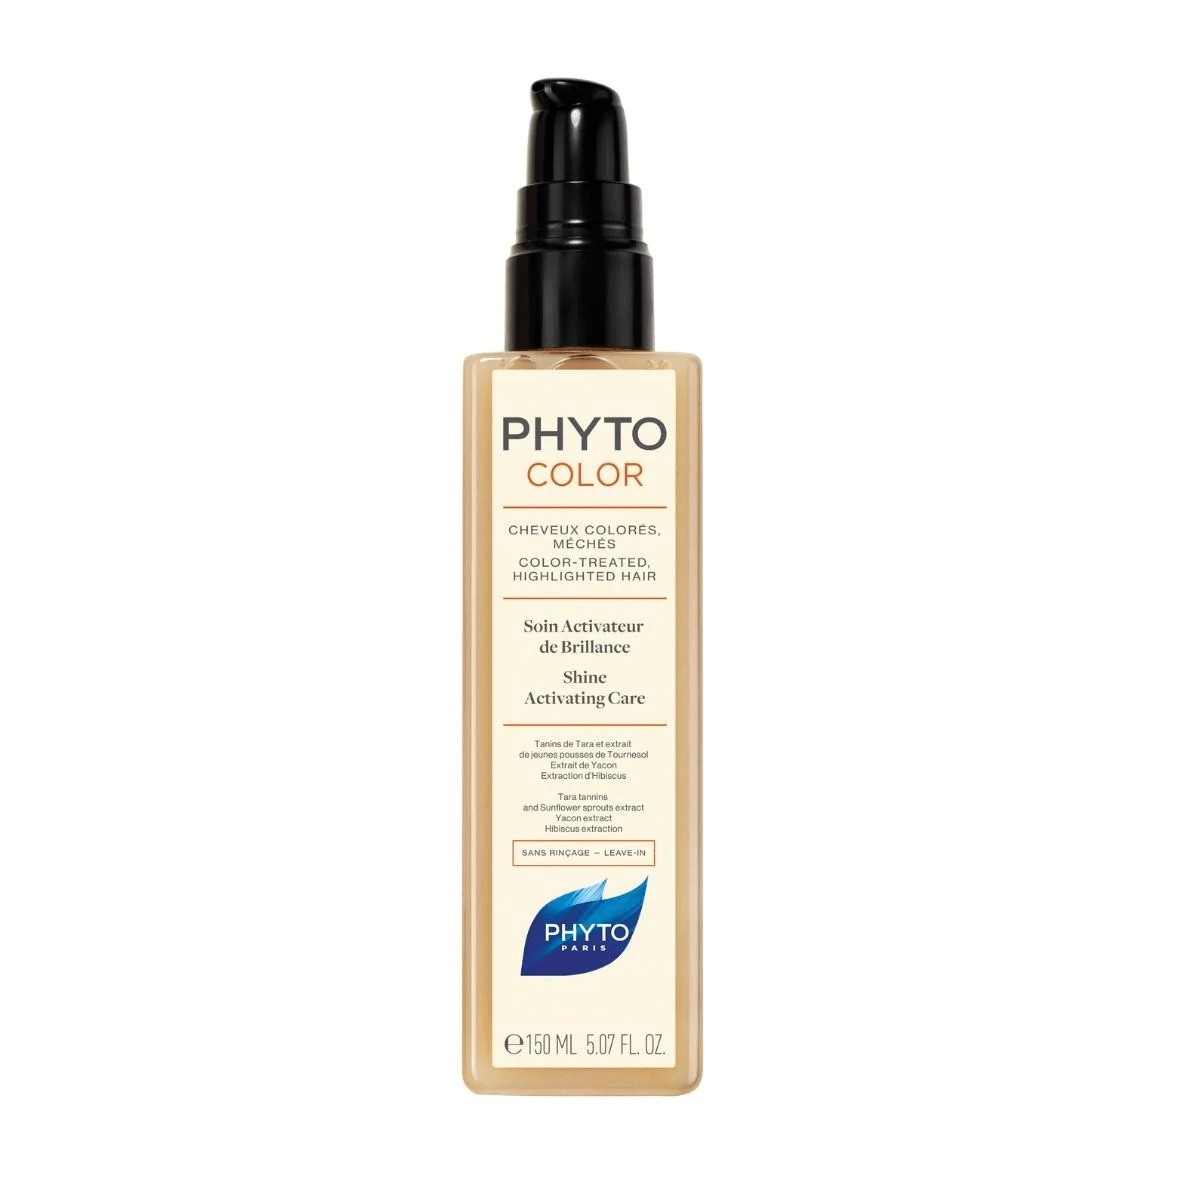 PHYTO Soins & Beauté Phytocolor (soin activateur de brillance)  150ml